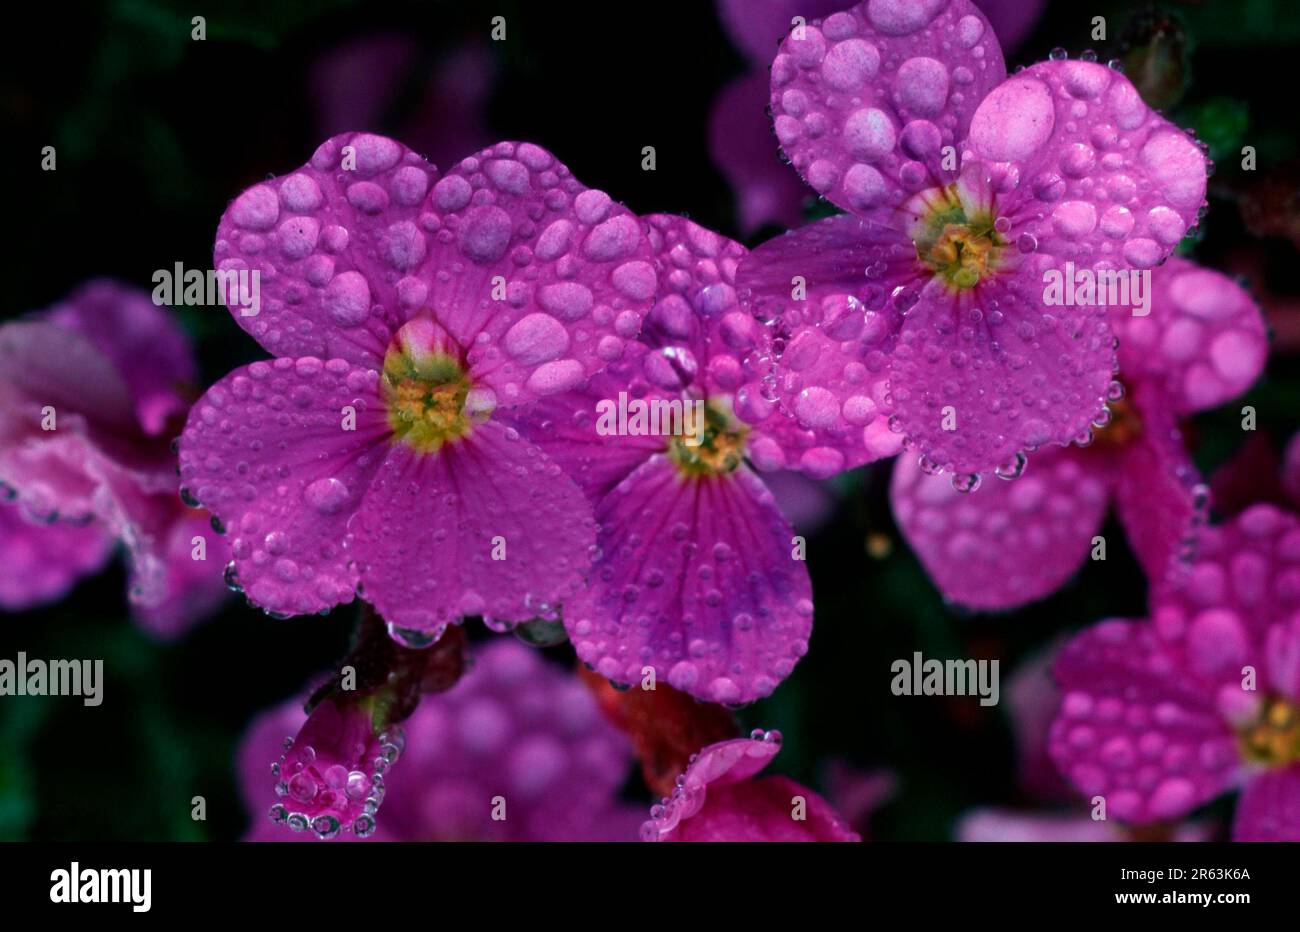 Cress flowers with raindrops (Aubrieta hybride), bluecress, flowers with raindrops (plants) (flowers) (garden plant) (flower) (close-up) (detail) Stock Photo